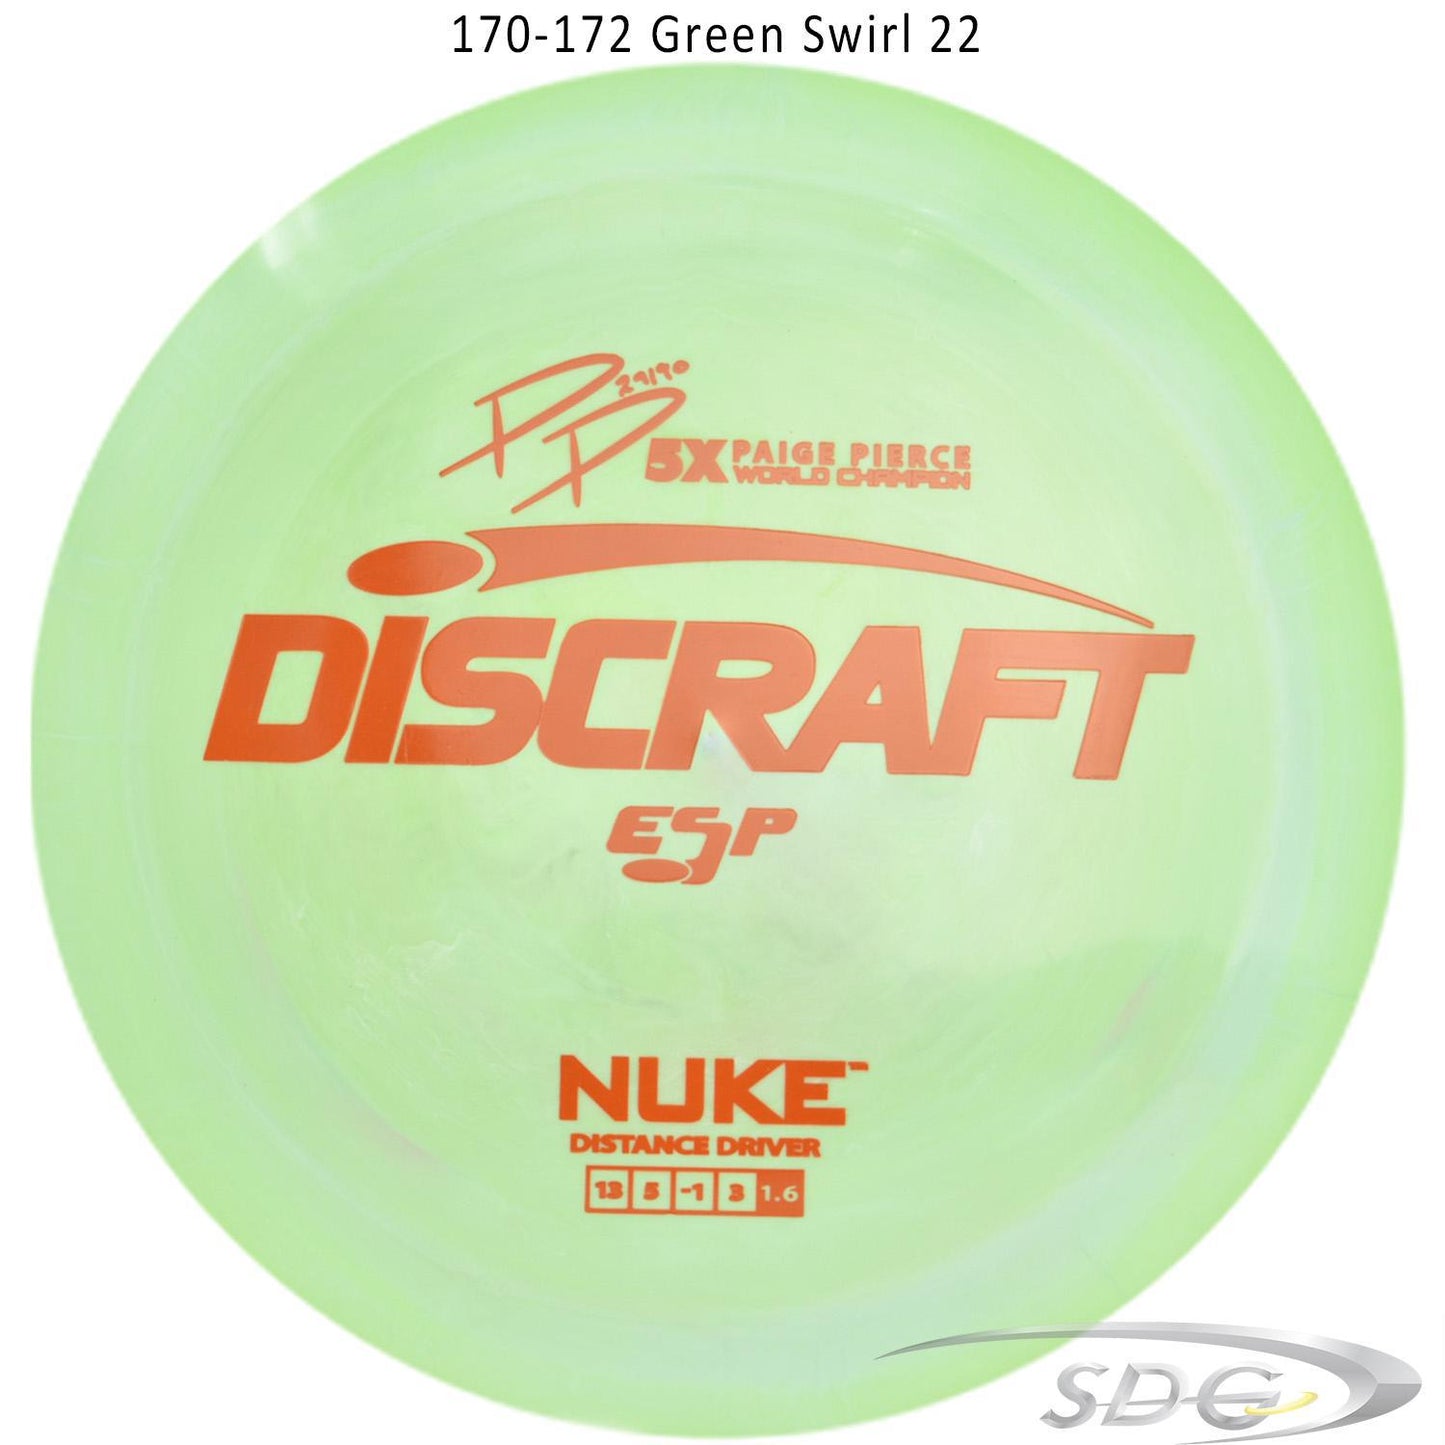 discraft-esp-nuke-paige-pierce-signature-disc-golf-distance-driver 170-172 Green Swirl 22